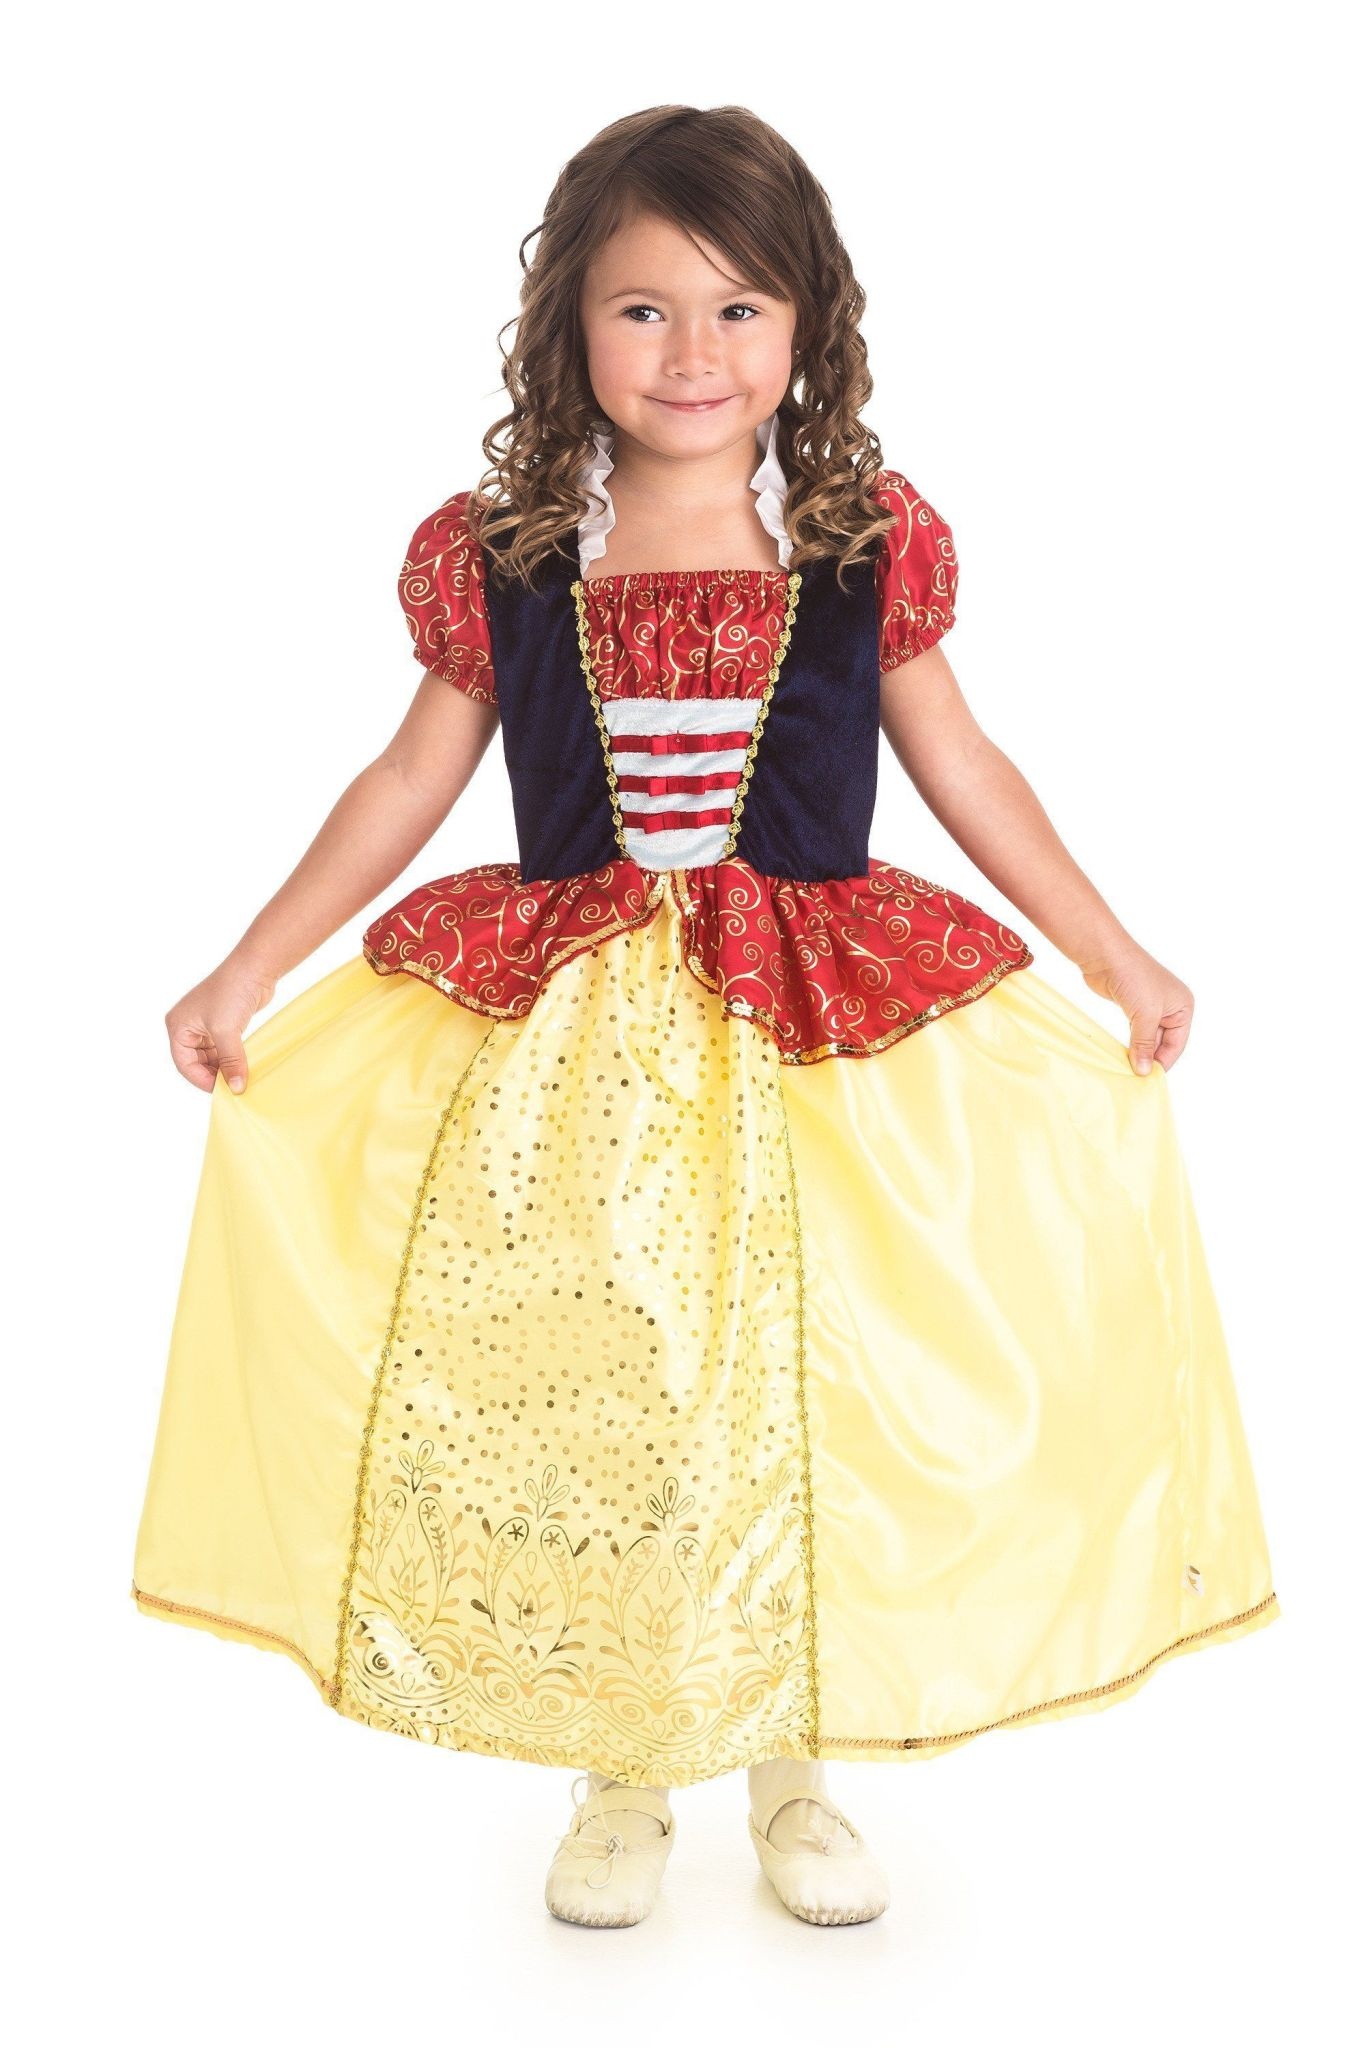 Little Adventures Snow White Dress - Large